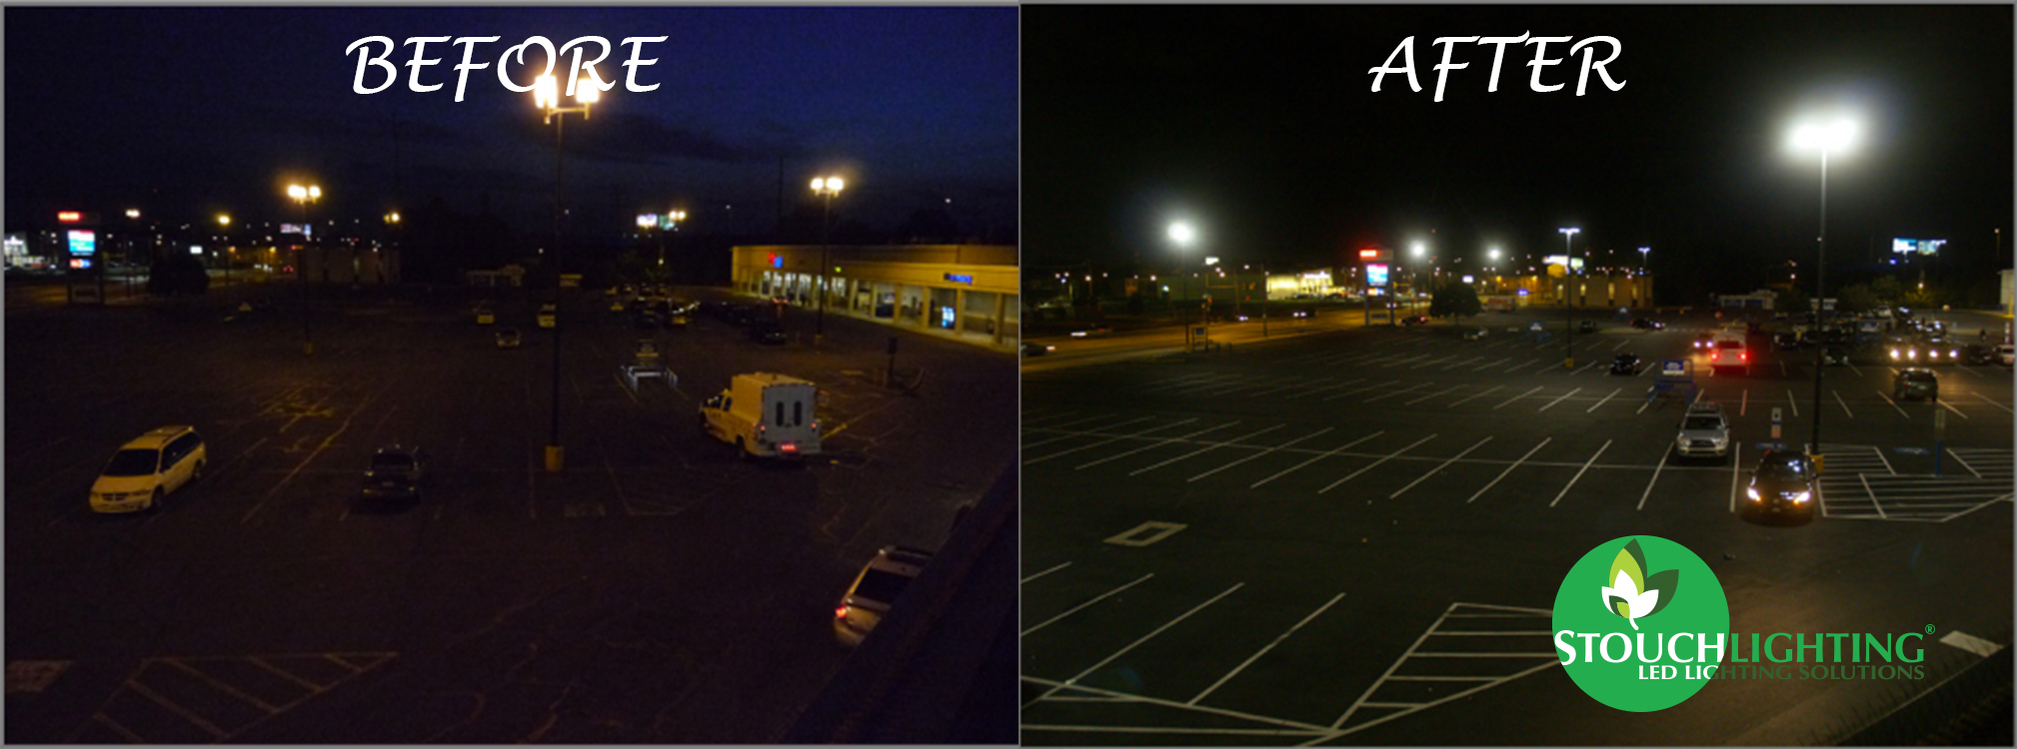 Before After LED Retrofit Parking Lot